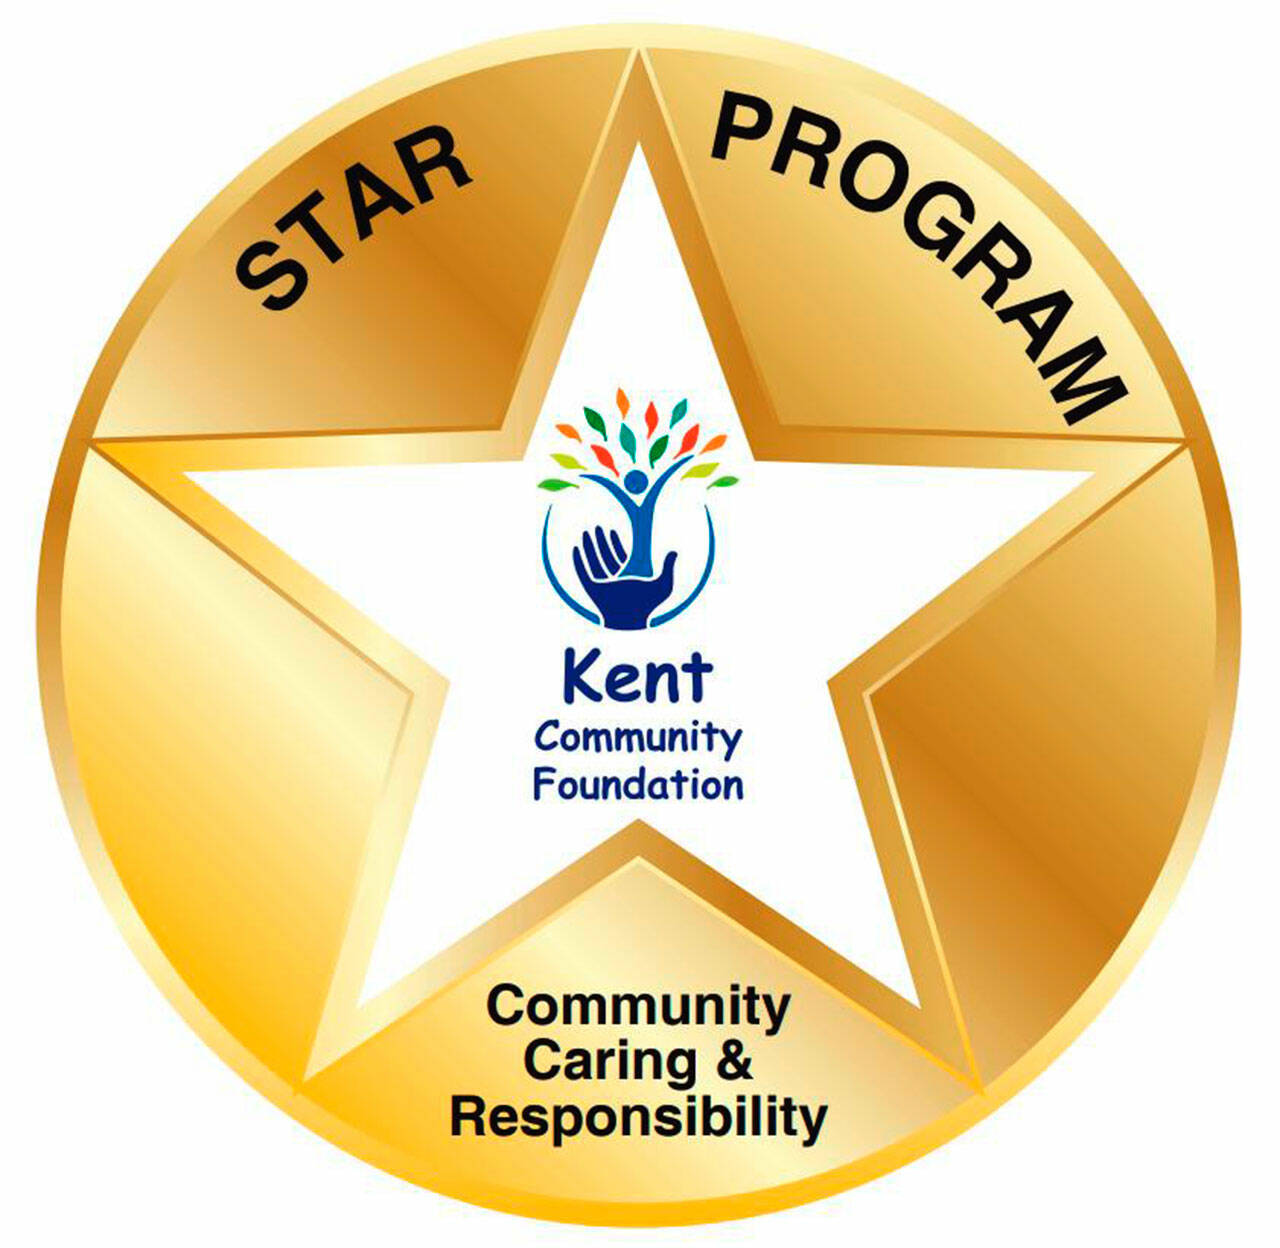 The Olive Tree Mediterranean Restaurant will receive the Kent Community Foundation’s first Star Program award. COURTESY IMAGE, Kent Community Foundation